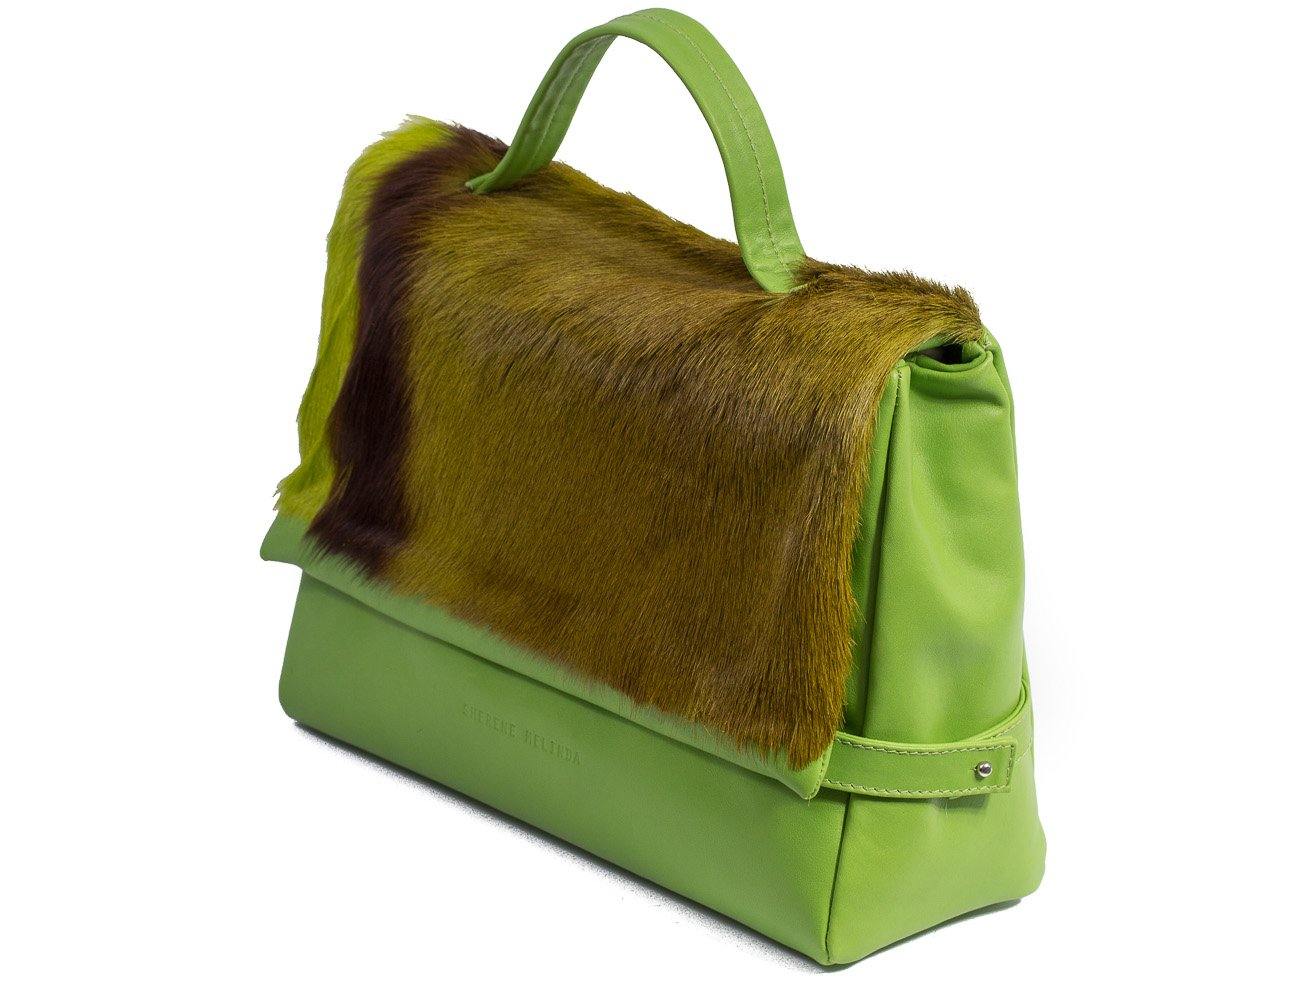 sherene melinda springbok hair-on-hide lime green leather smith tote bag Stripe side angle